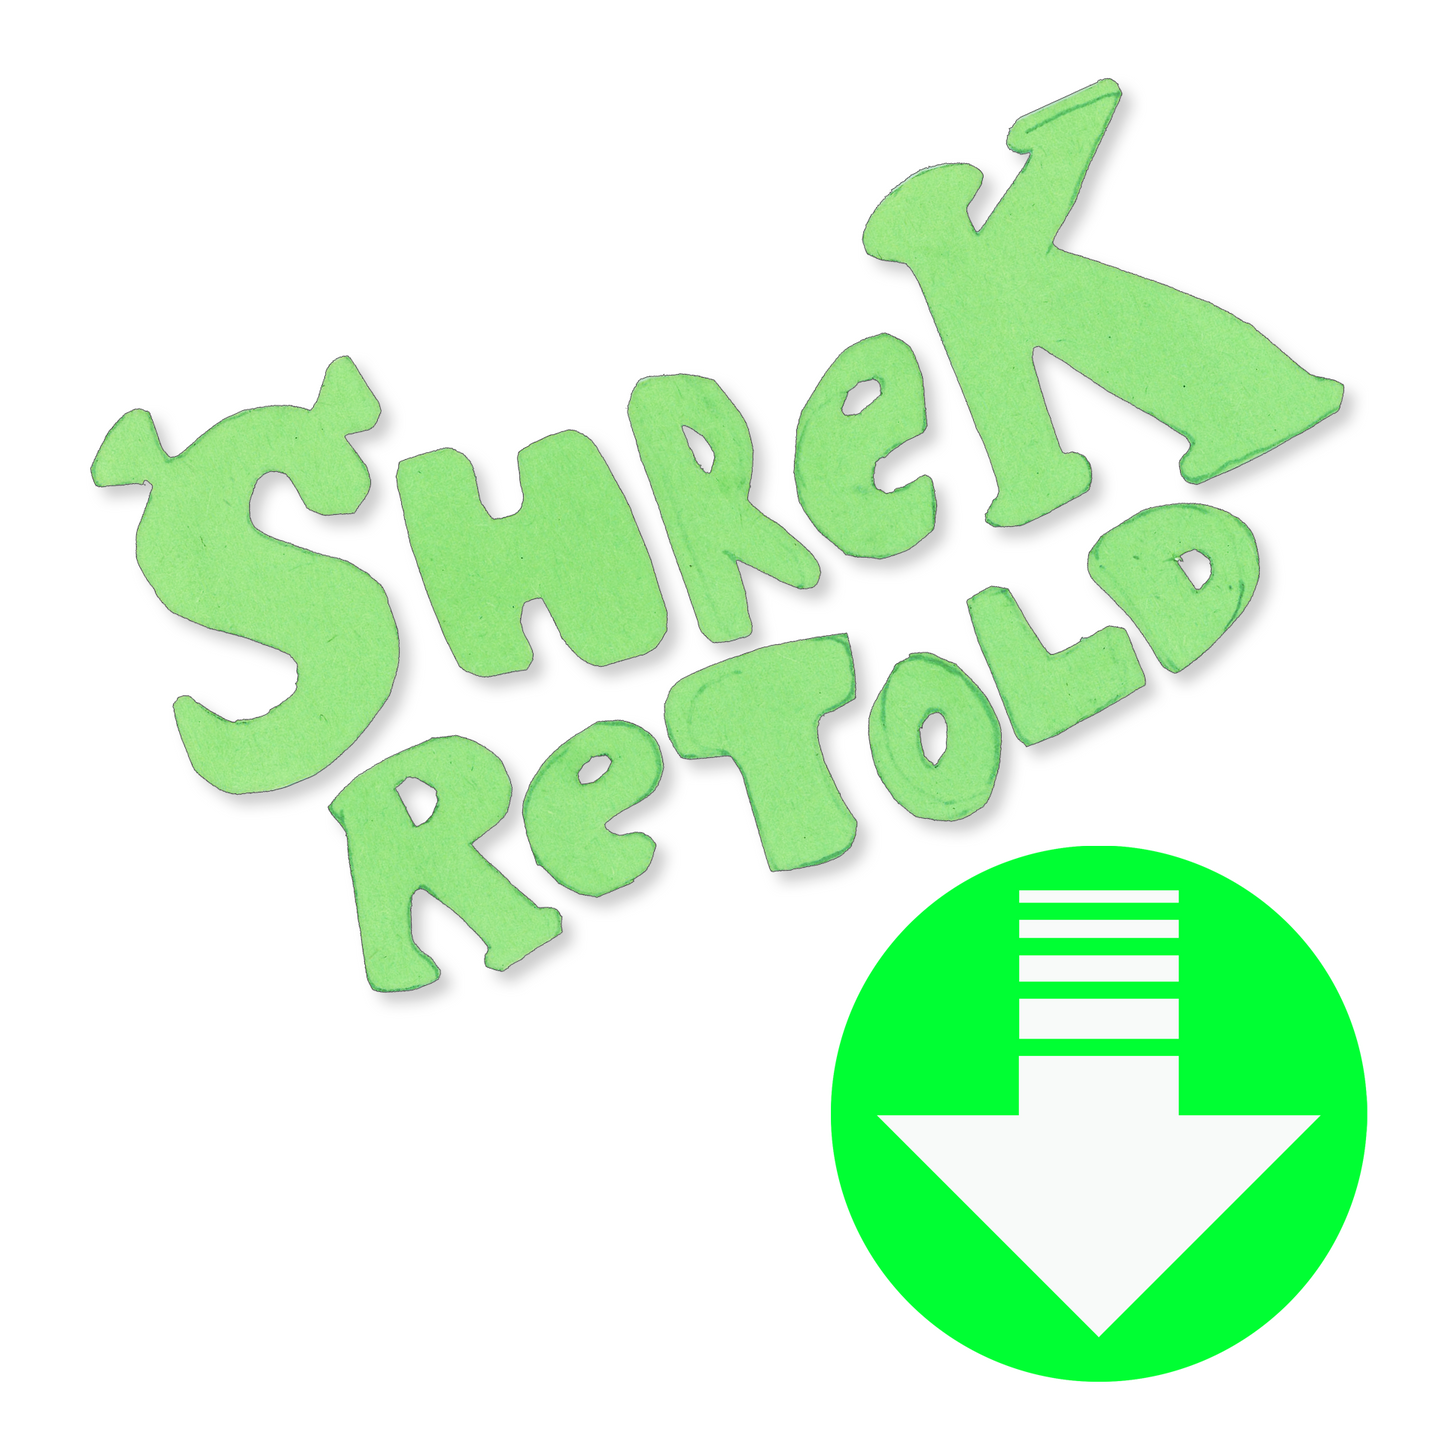 Shrek Retold - Digital Download